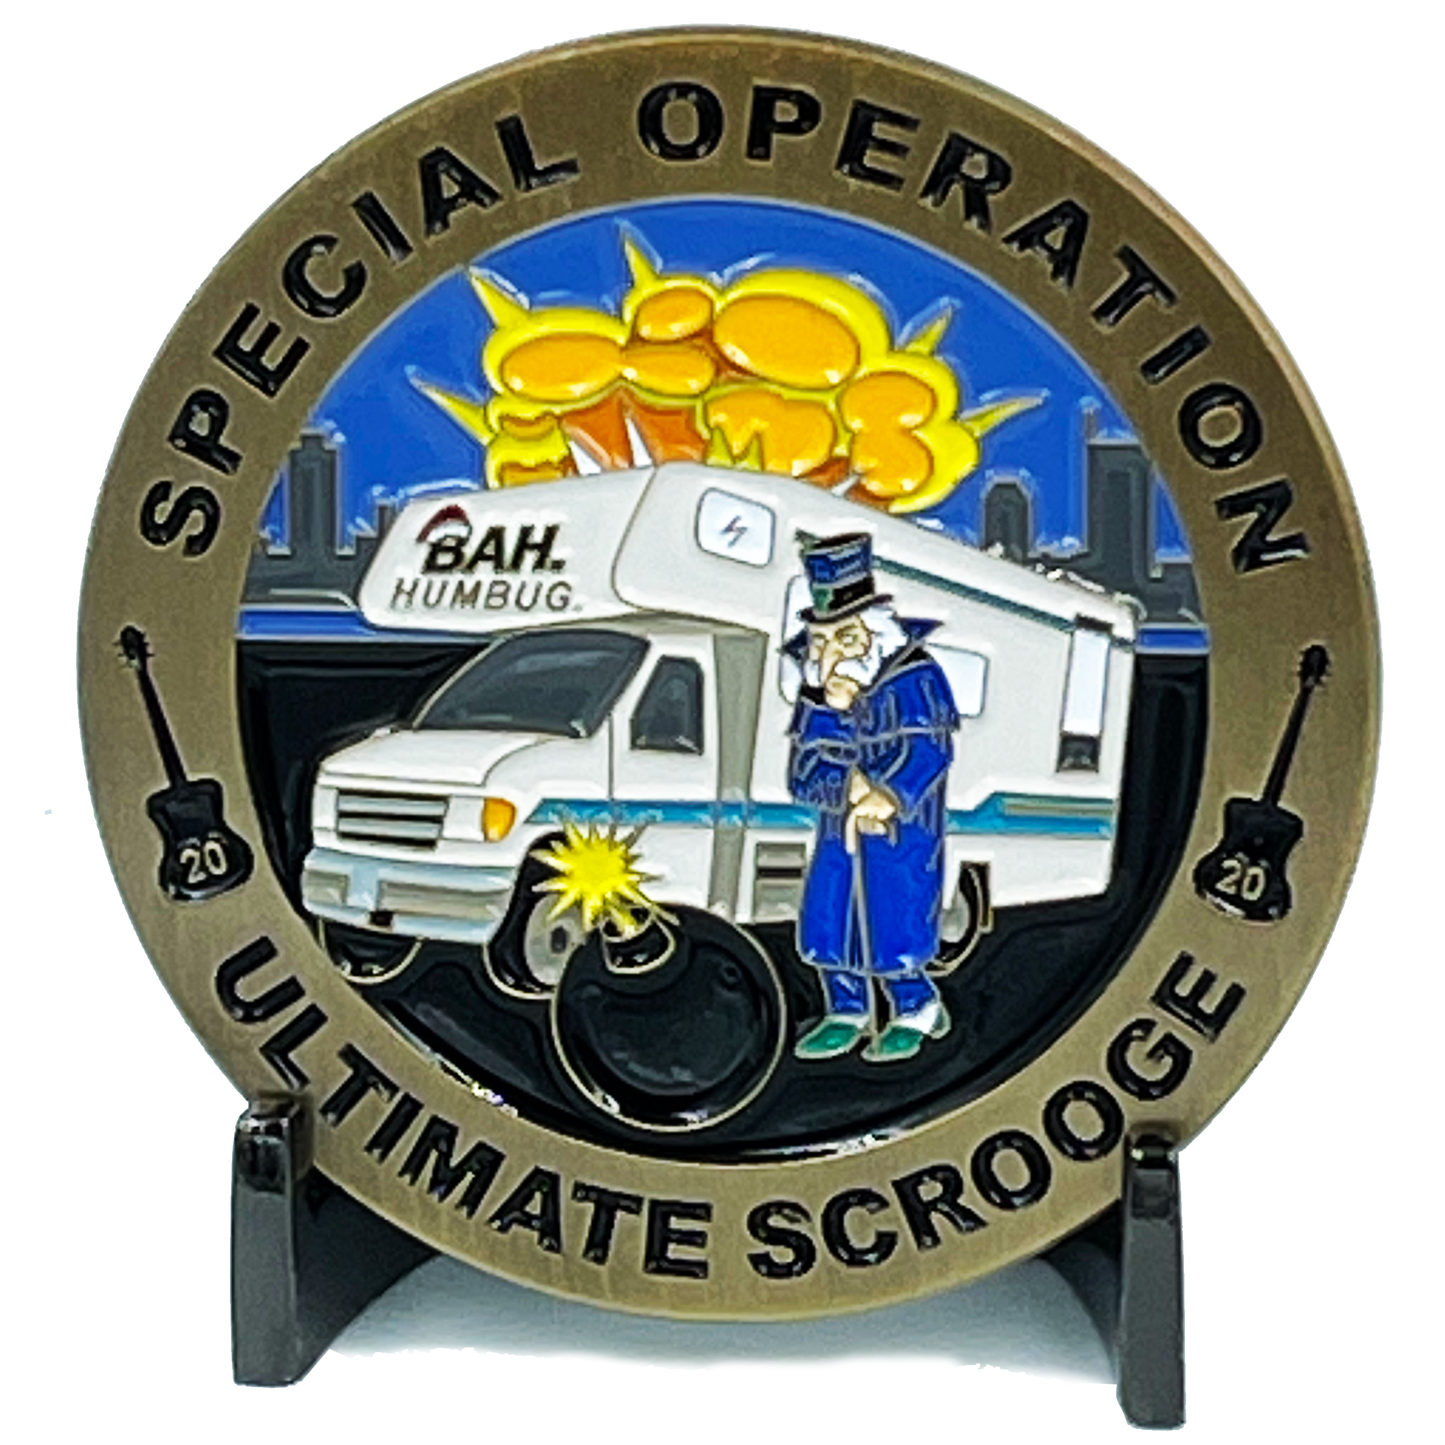 EL8-007 Ultimate Scrooge Task Force FBI ATF Special Agent Metro Nashville Police Department Challenge Coin RV Explosion 2020